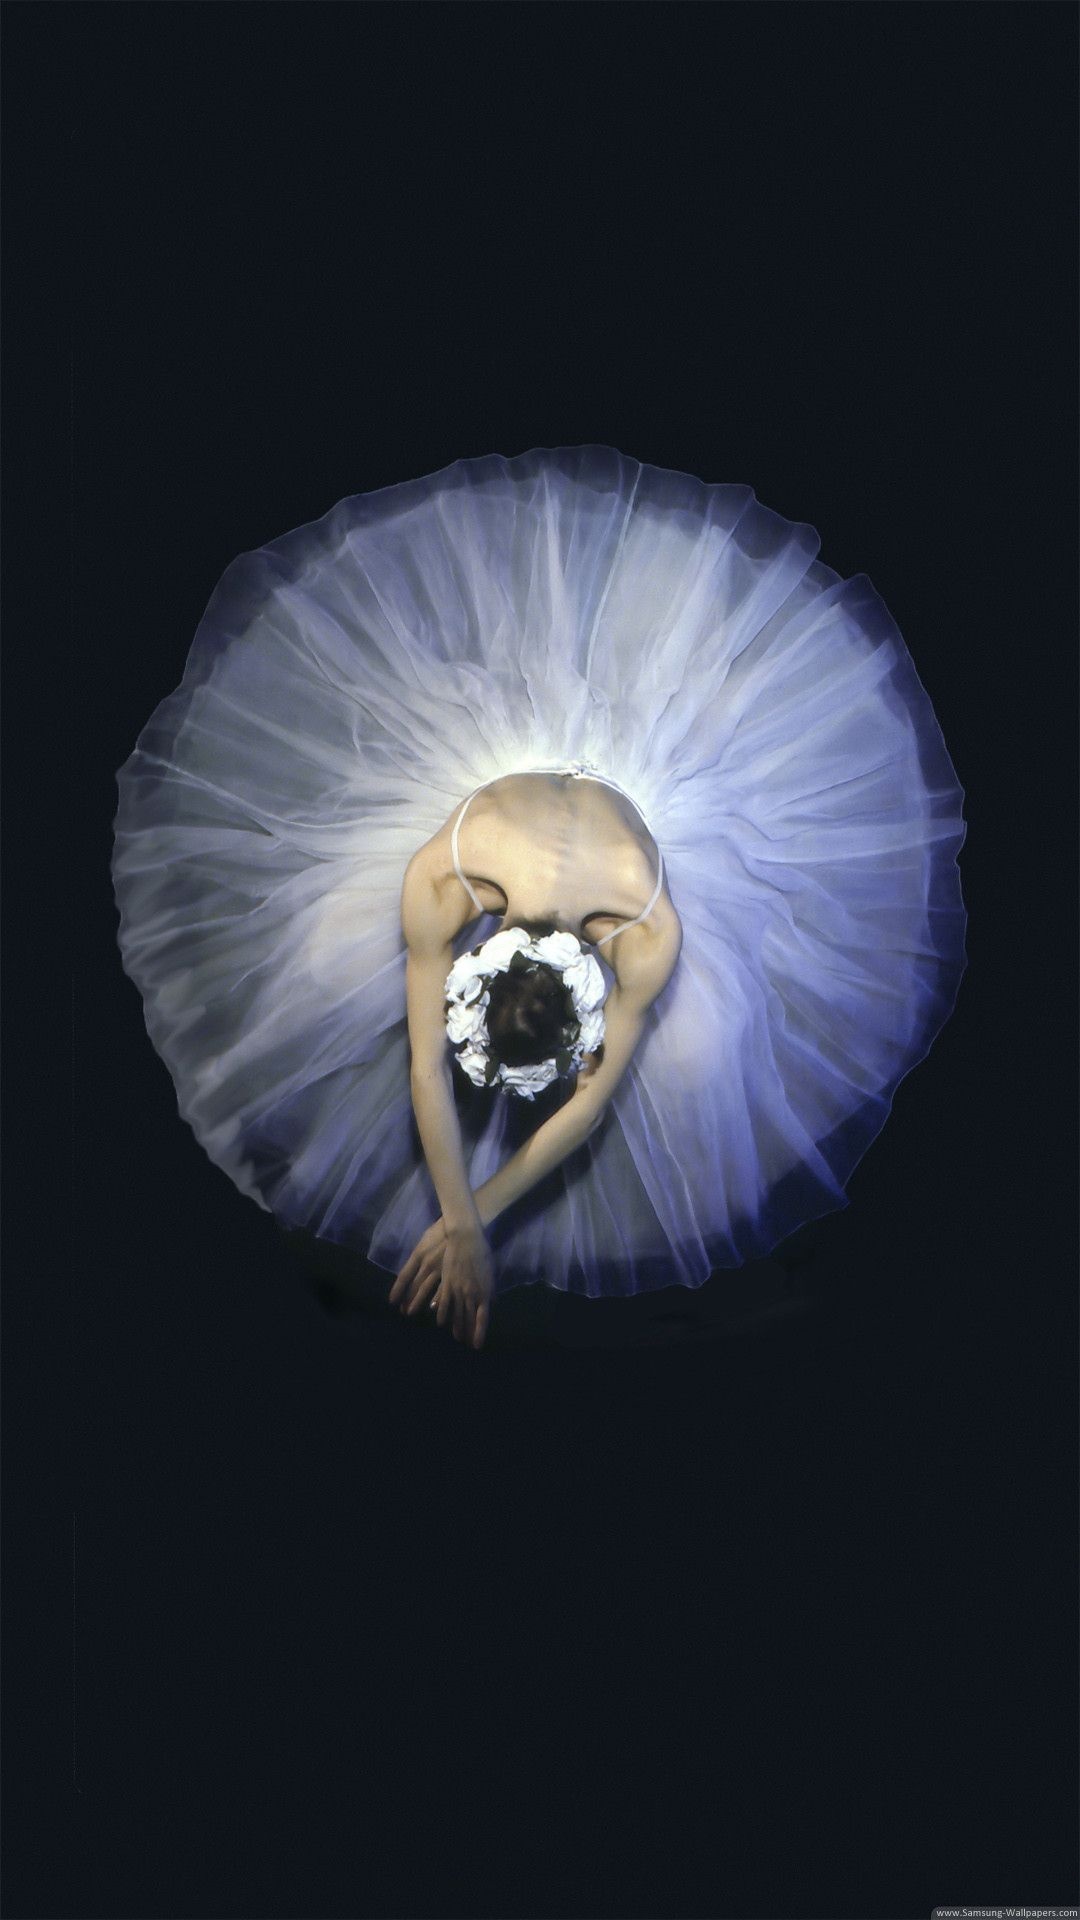 Ballet: A tutu, A gauzy skirt worn by performing ballerinas. 1080x1920 Full HD Wallpaper.